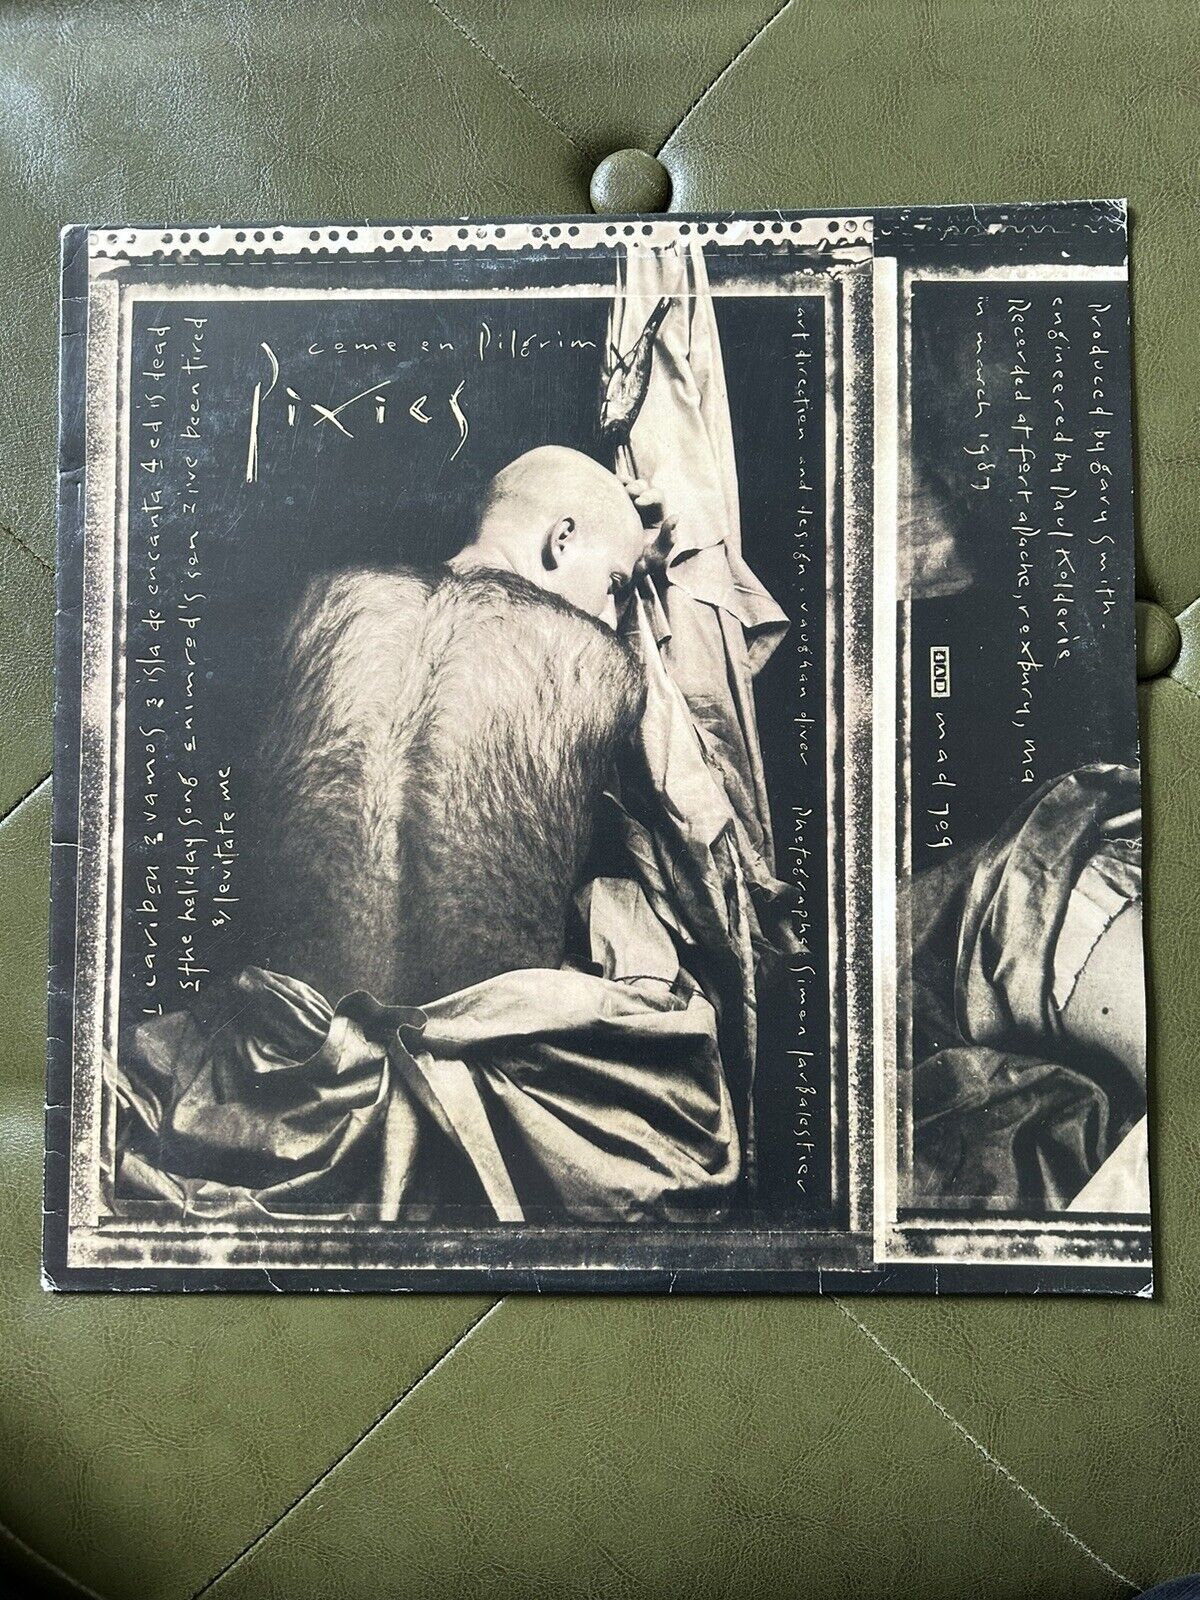 PIXIES / COME ON PILGRIM 1987 VG Vinyl LP (Made In England) RARE